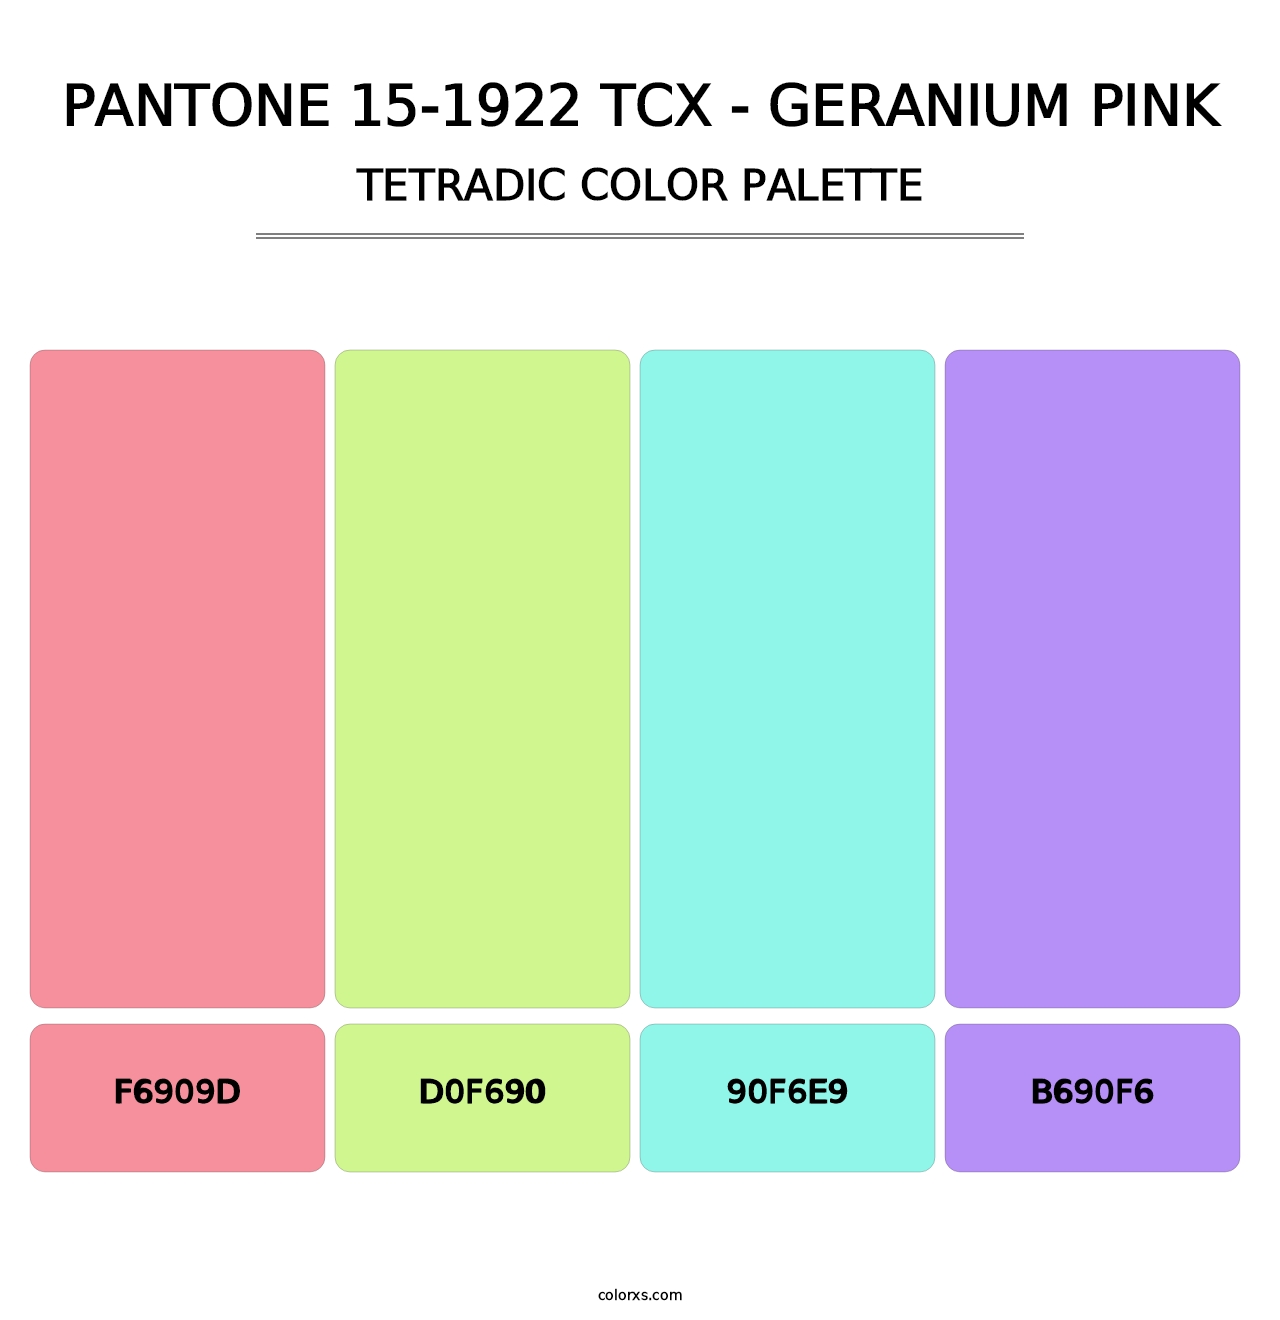 PANTONE 15-1922 TCX - Geranium Pink - Tetradic Color Palette